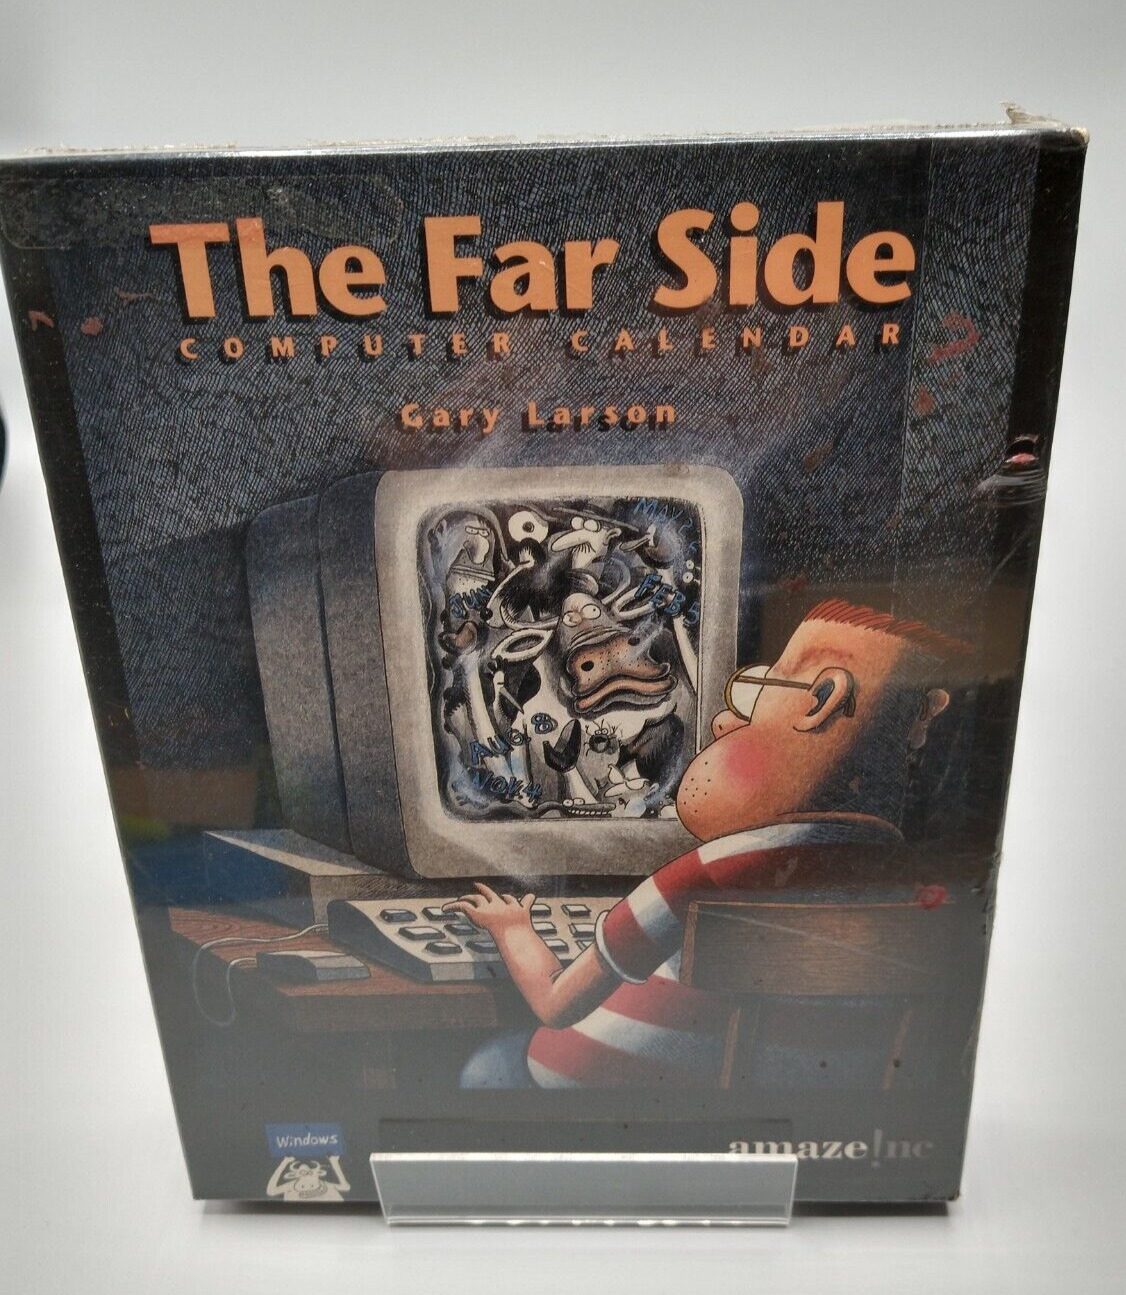 NEW - The Far Side 1991 Windows Computer Calendar